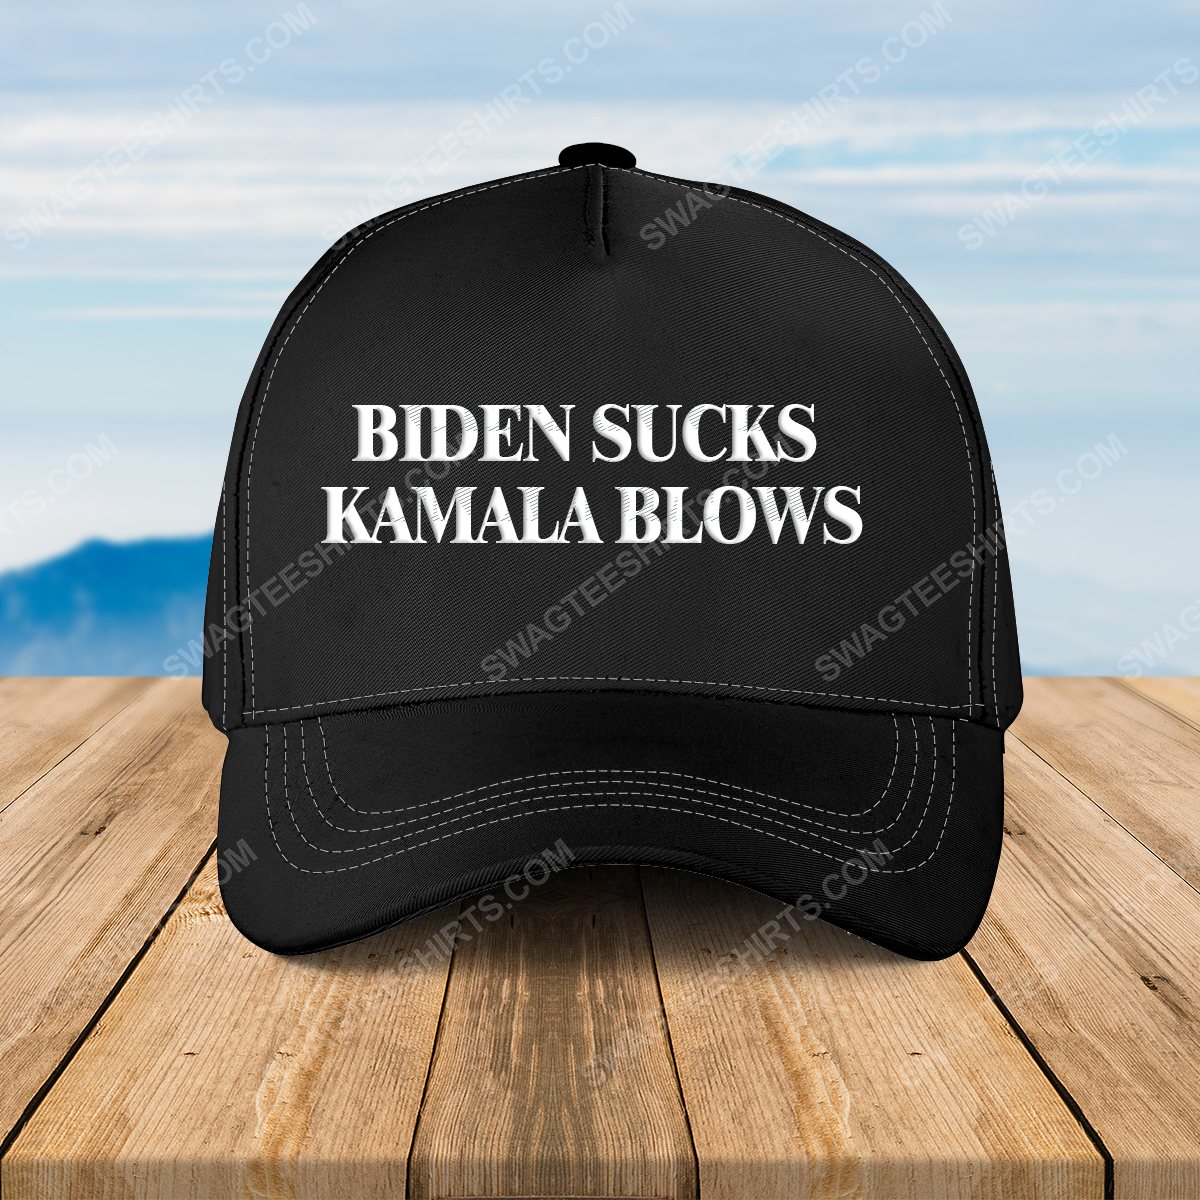 Biden sucks kamala blows full print classic hat 1